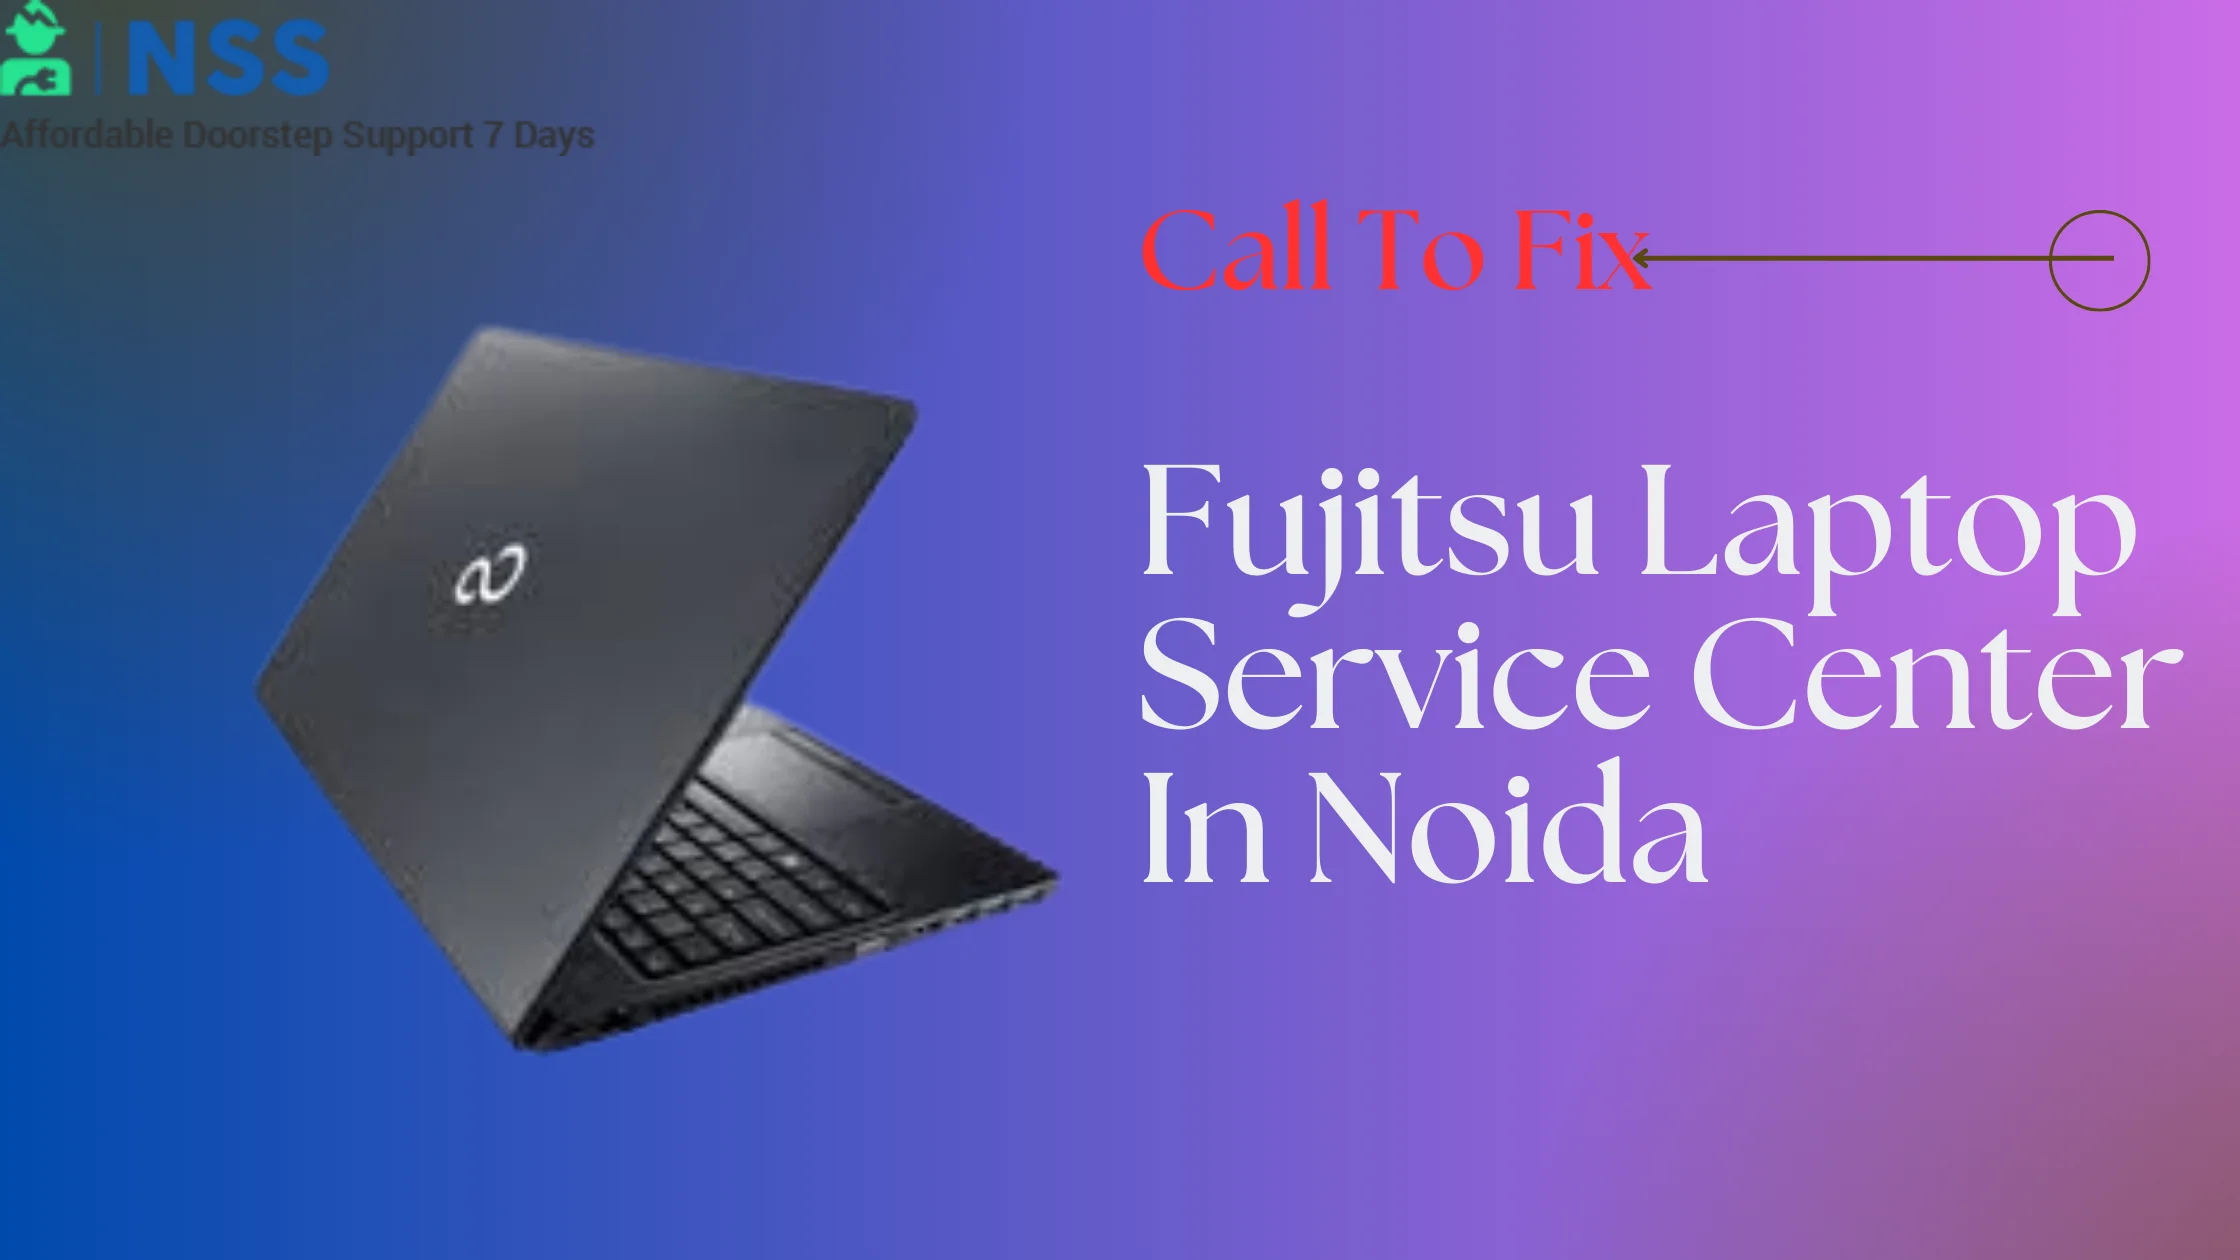 Fujitsu Laptop Service Center in Noida